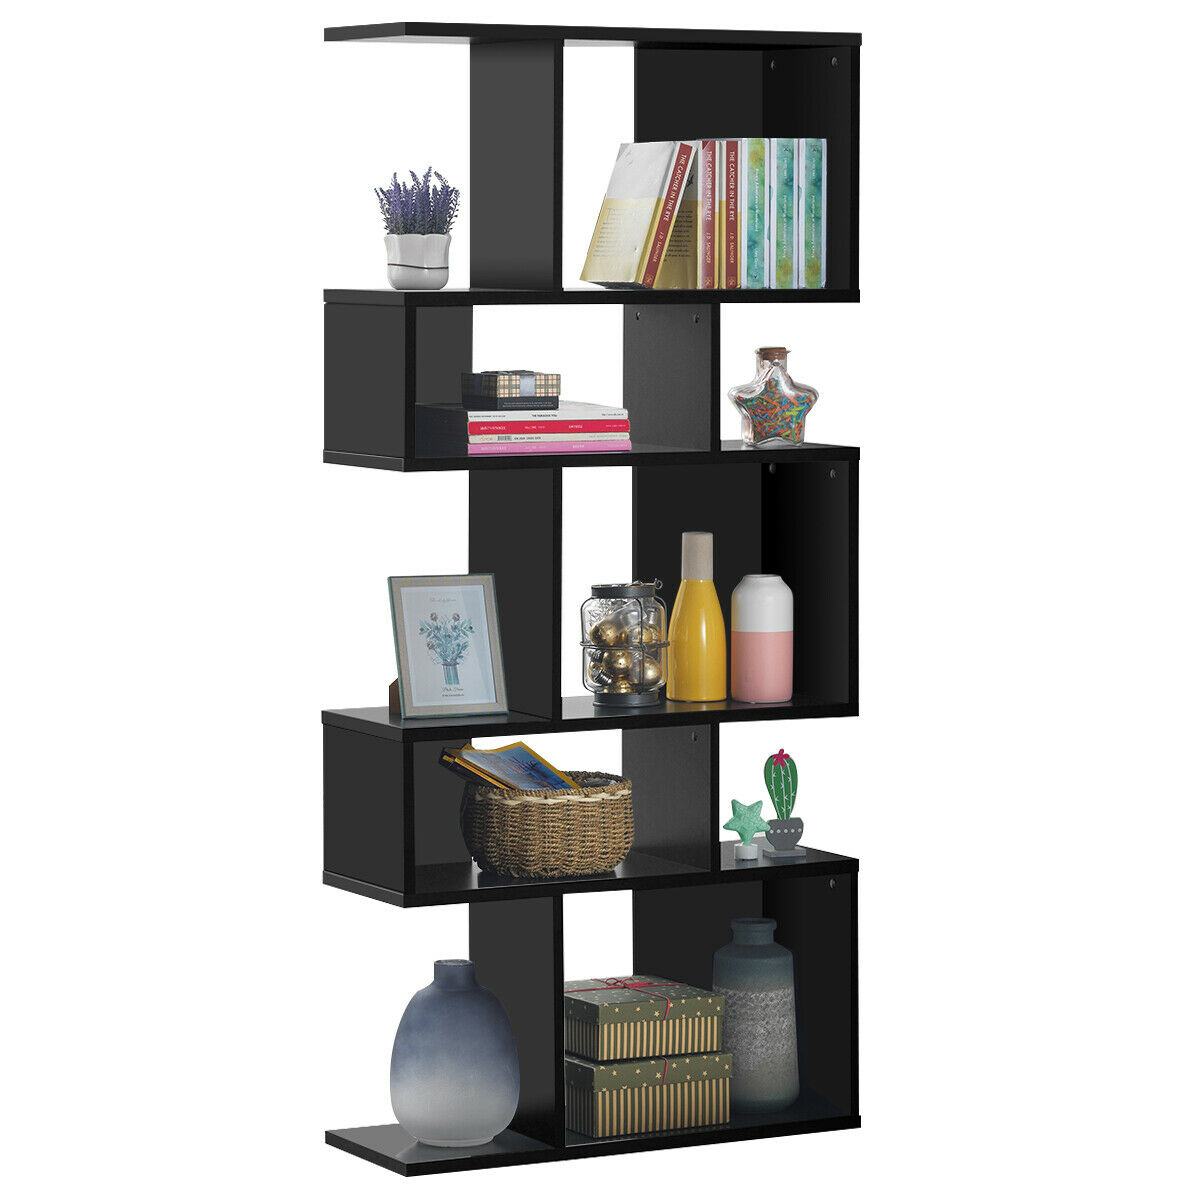 5 Cubes Ladder Shelf Freestanding Corner Bookshelf Display Rack Bookcase - Black